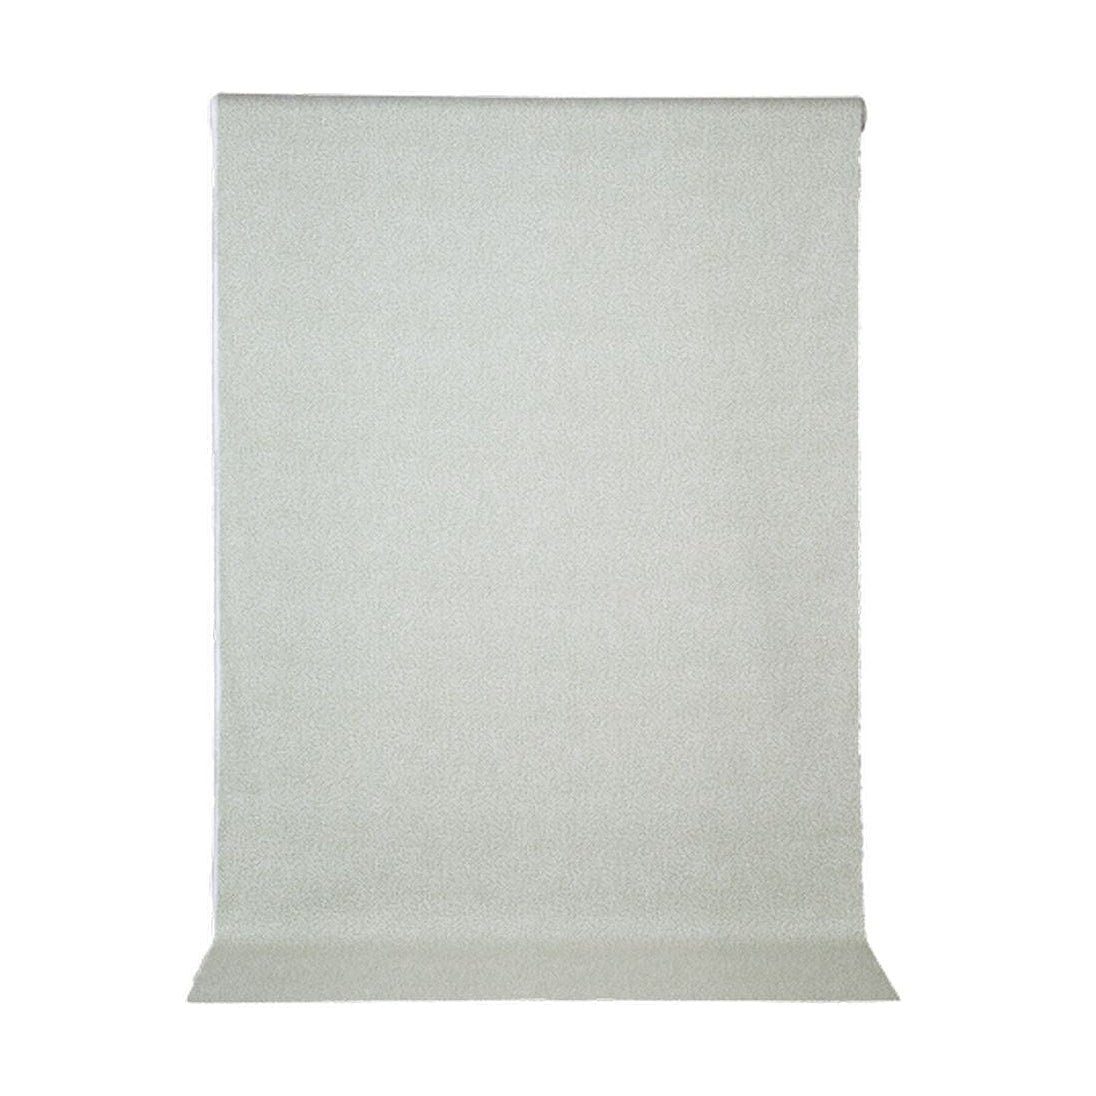 Spira Dotte Fabric Width 150 Cm (Price Per Meter), Sage Green